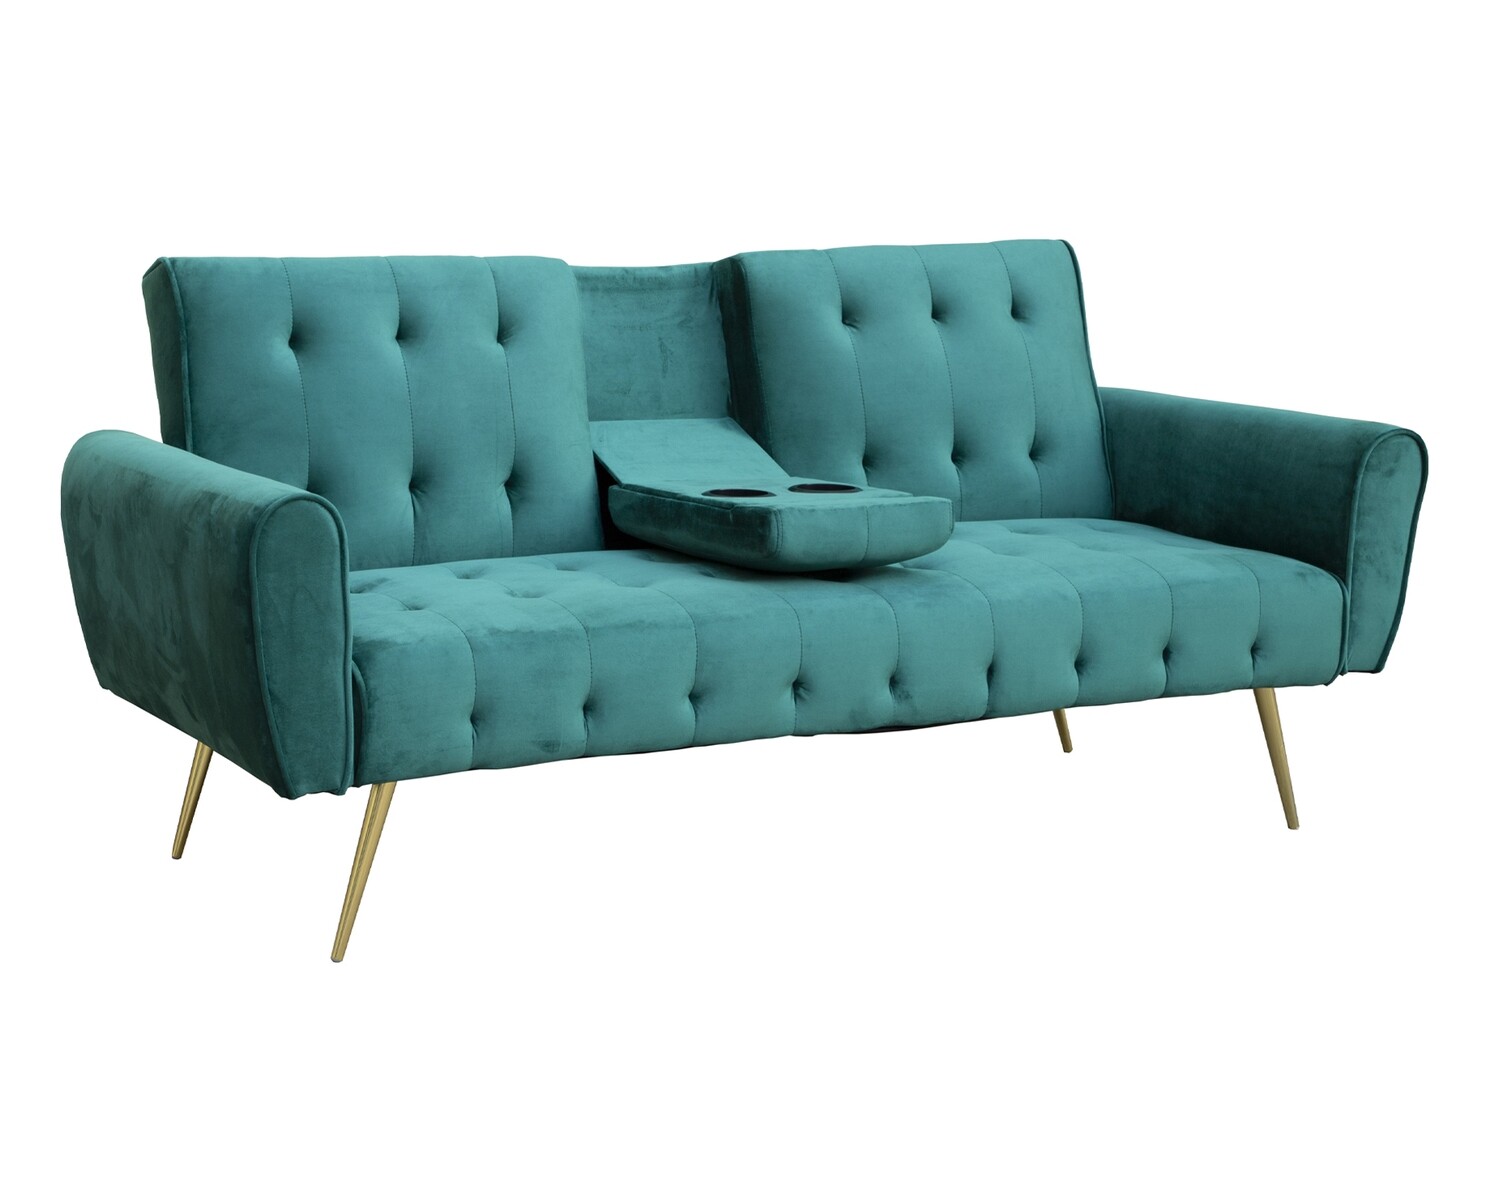 Flotti Zaire Sofa Bed (Navy Blue, Green)